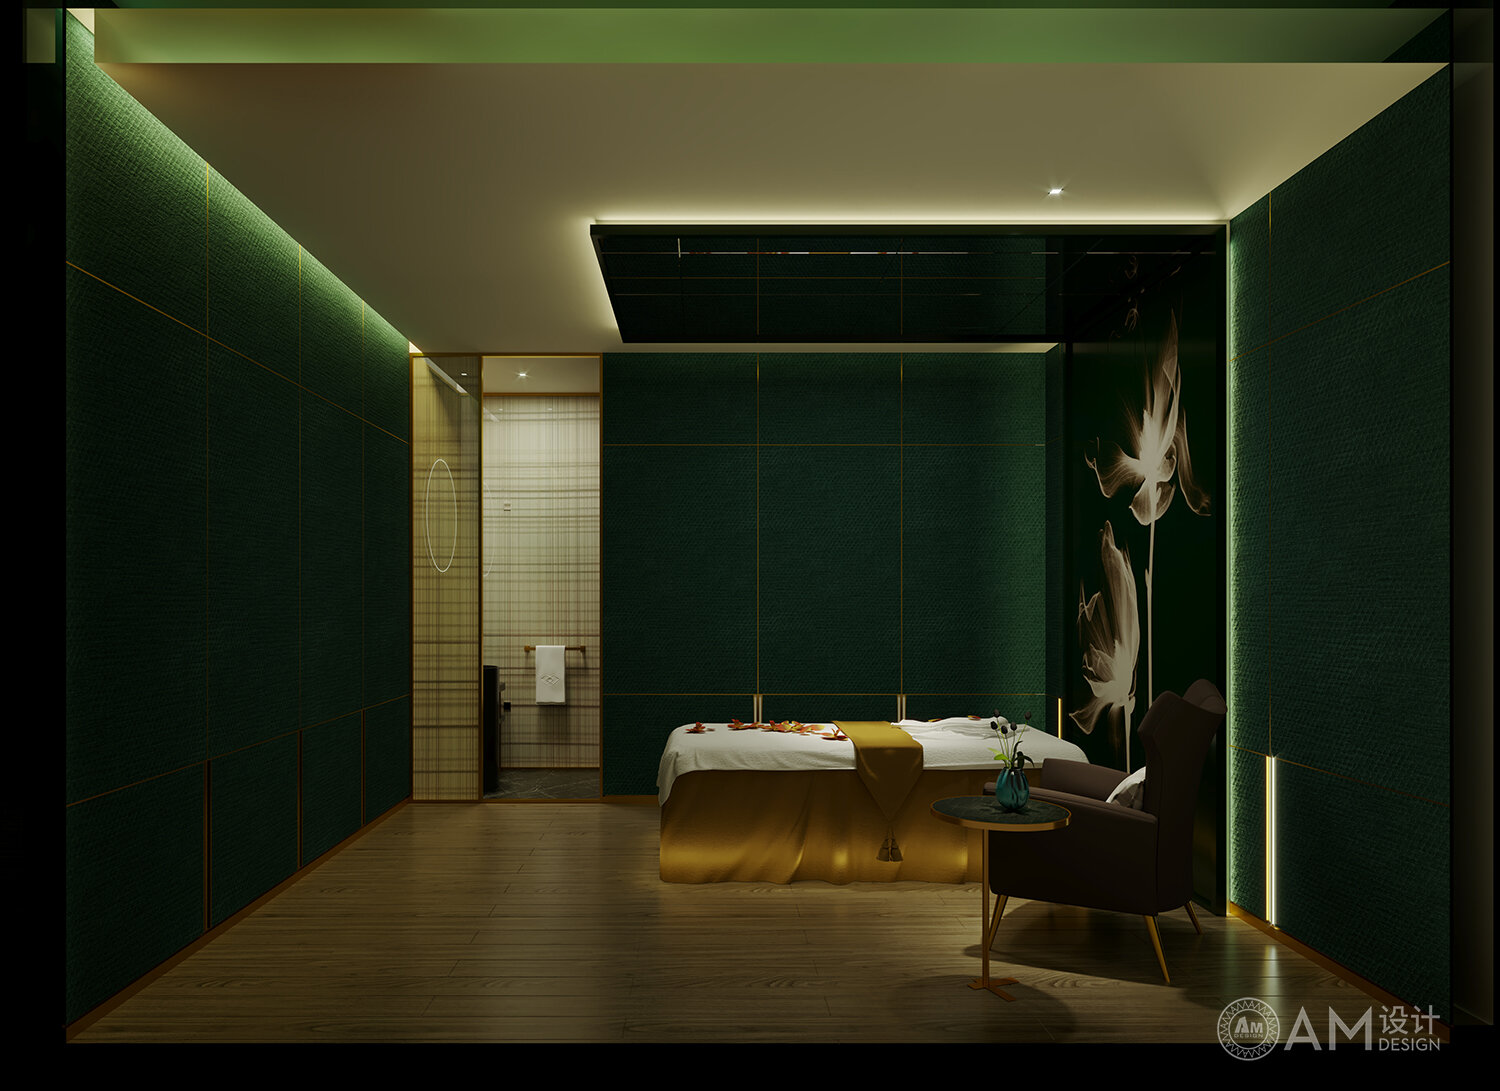 AM | Design of Beijing lishiyuan Spa Club